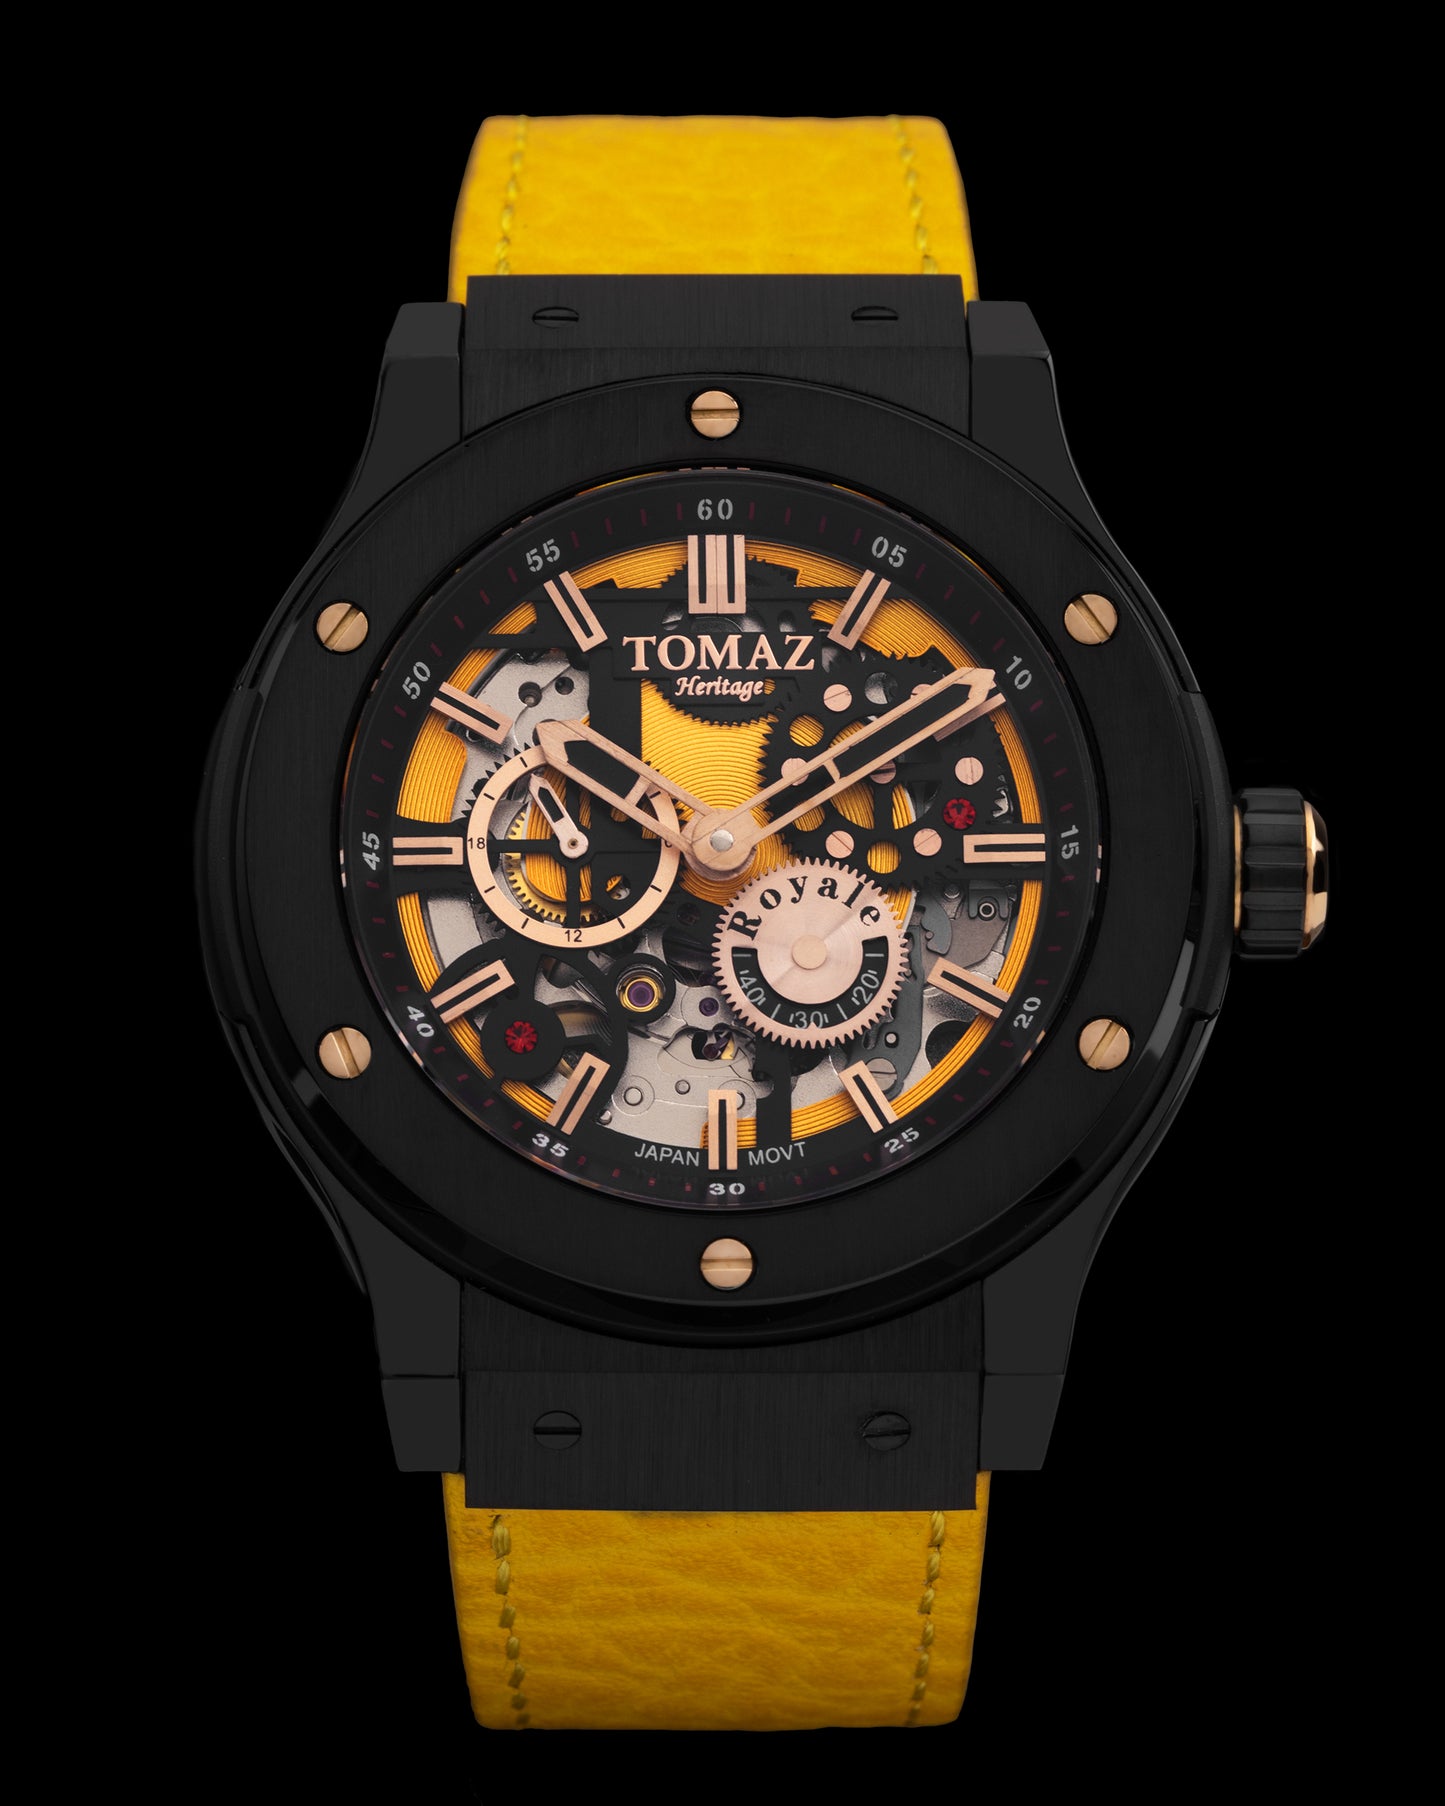 Tomaz Men's Watch TW014-D7 (Black/Yellow) Yellow Leather Strap